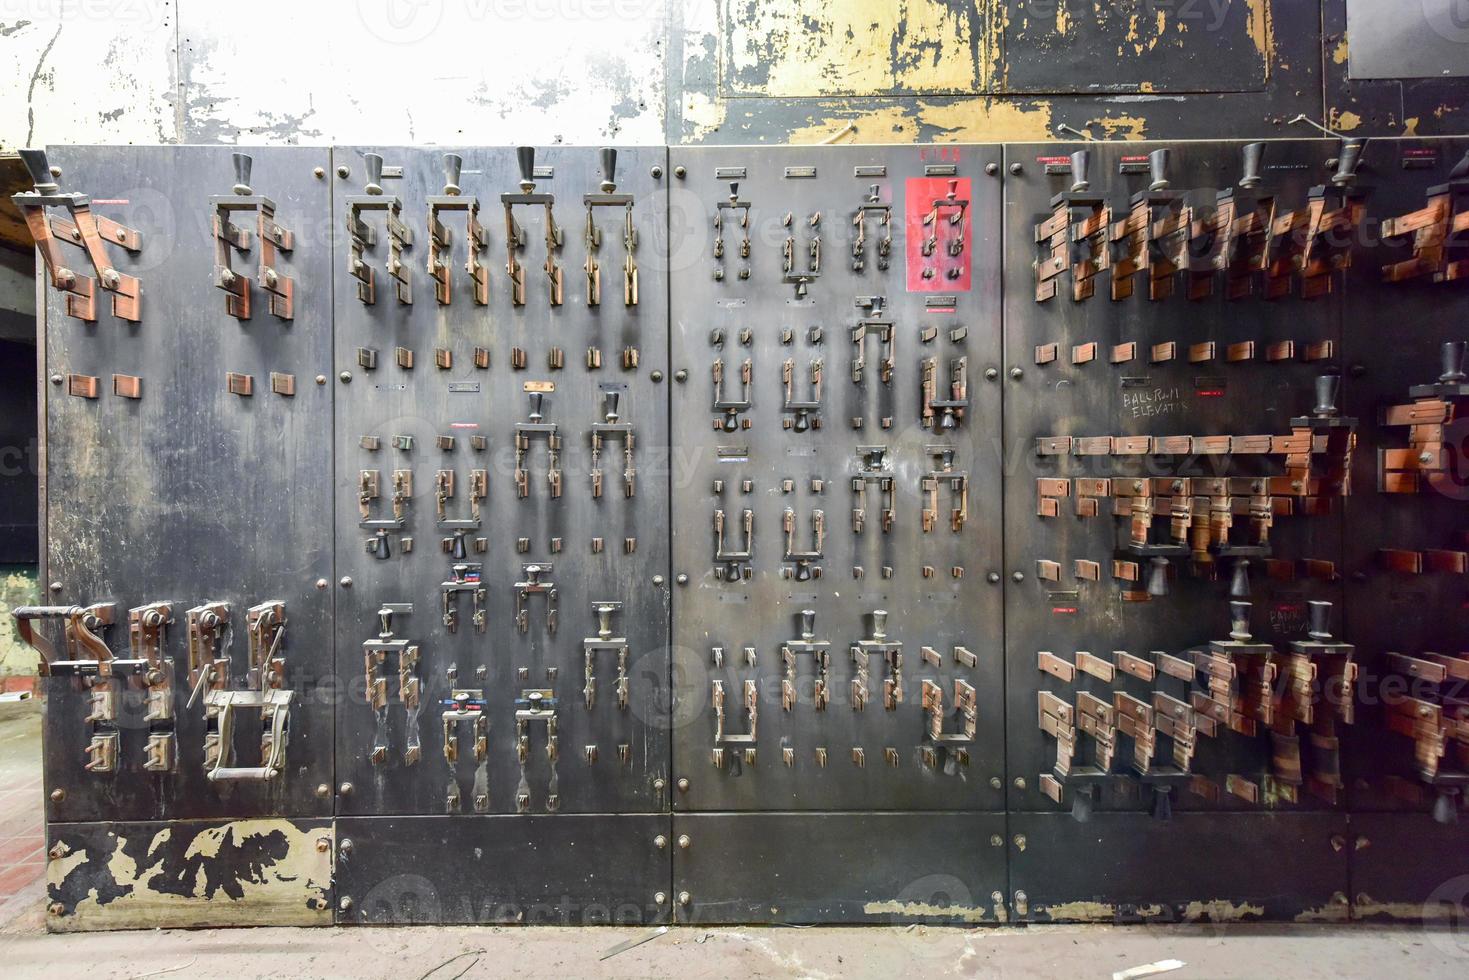 Vintage electrical breakers and meters. photo